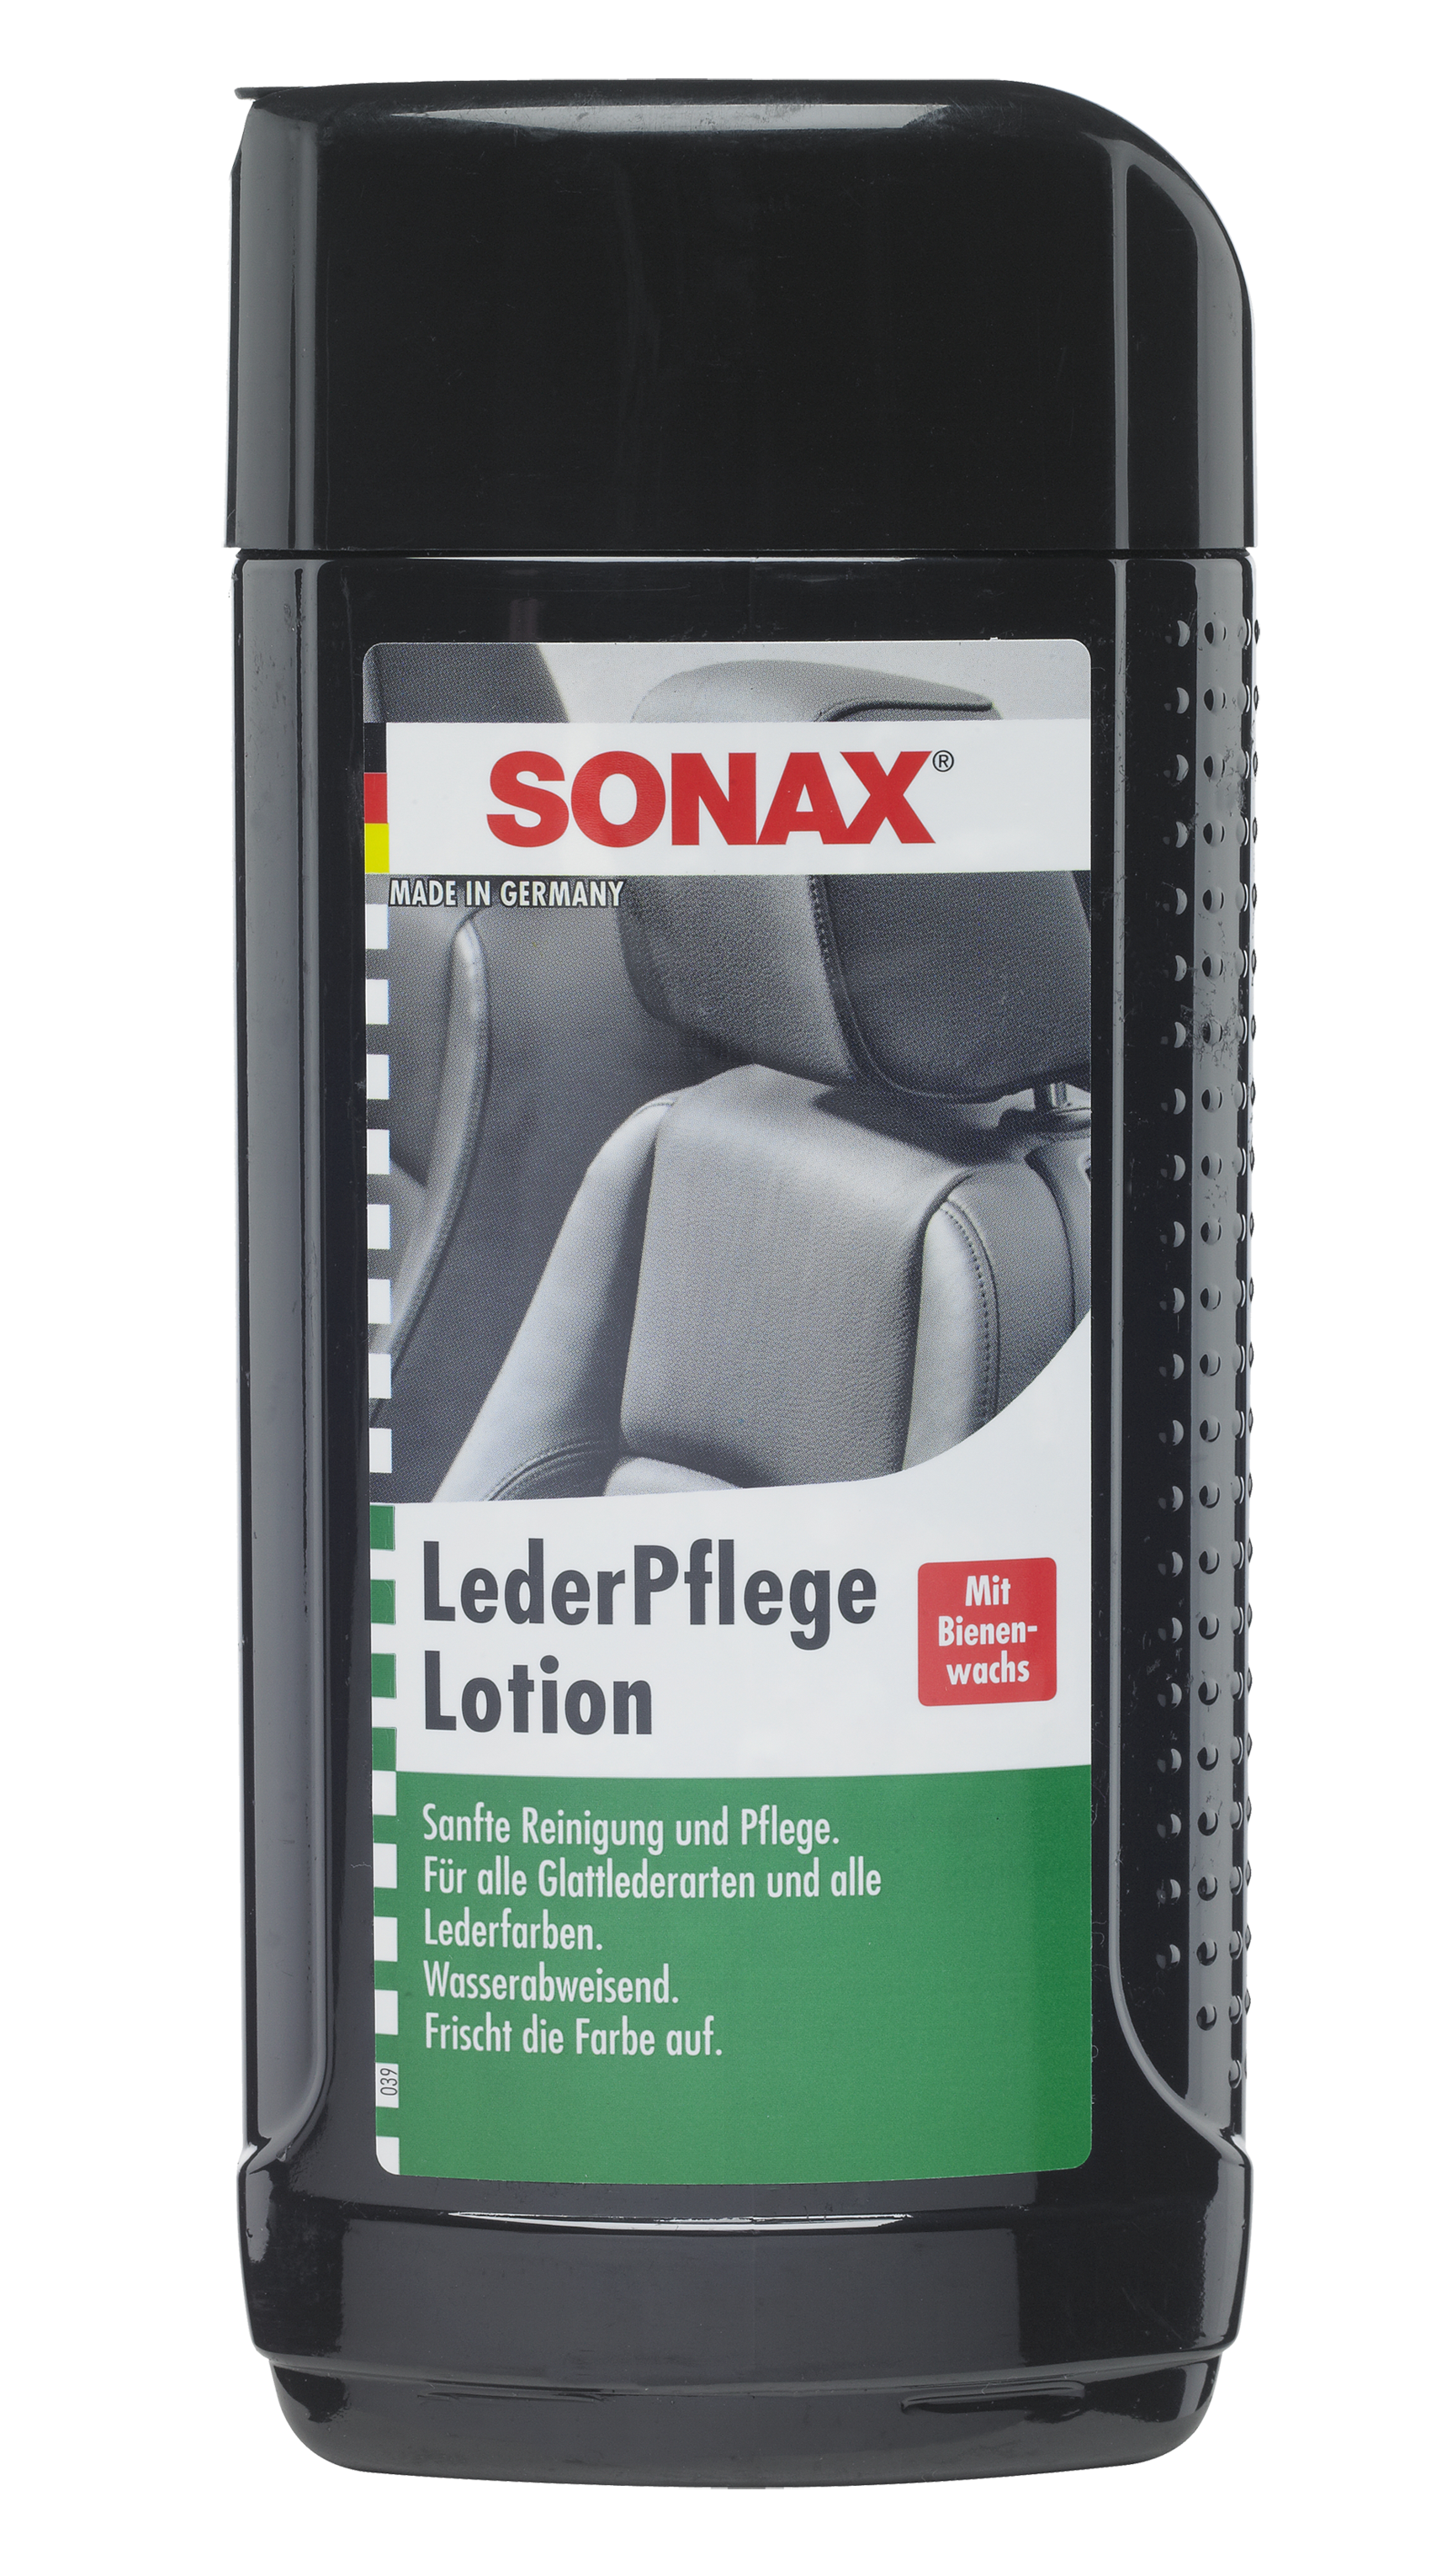 SONAX LederPflegeLotion 291200 500ml